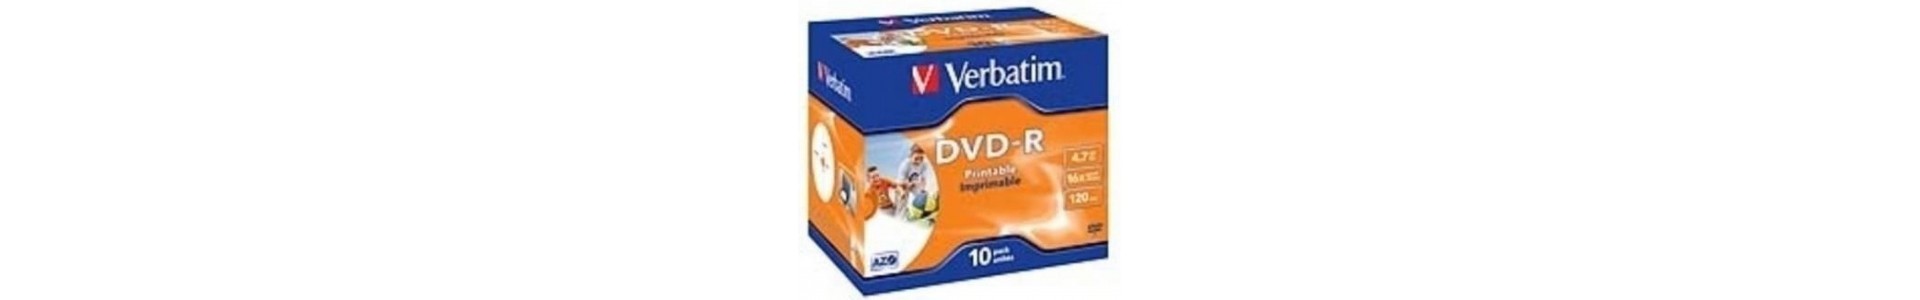 Consumible Media DVD's